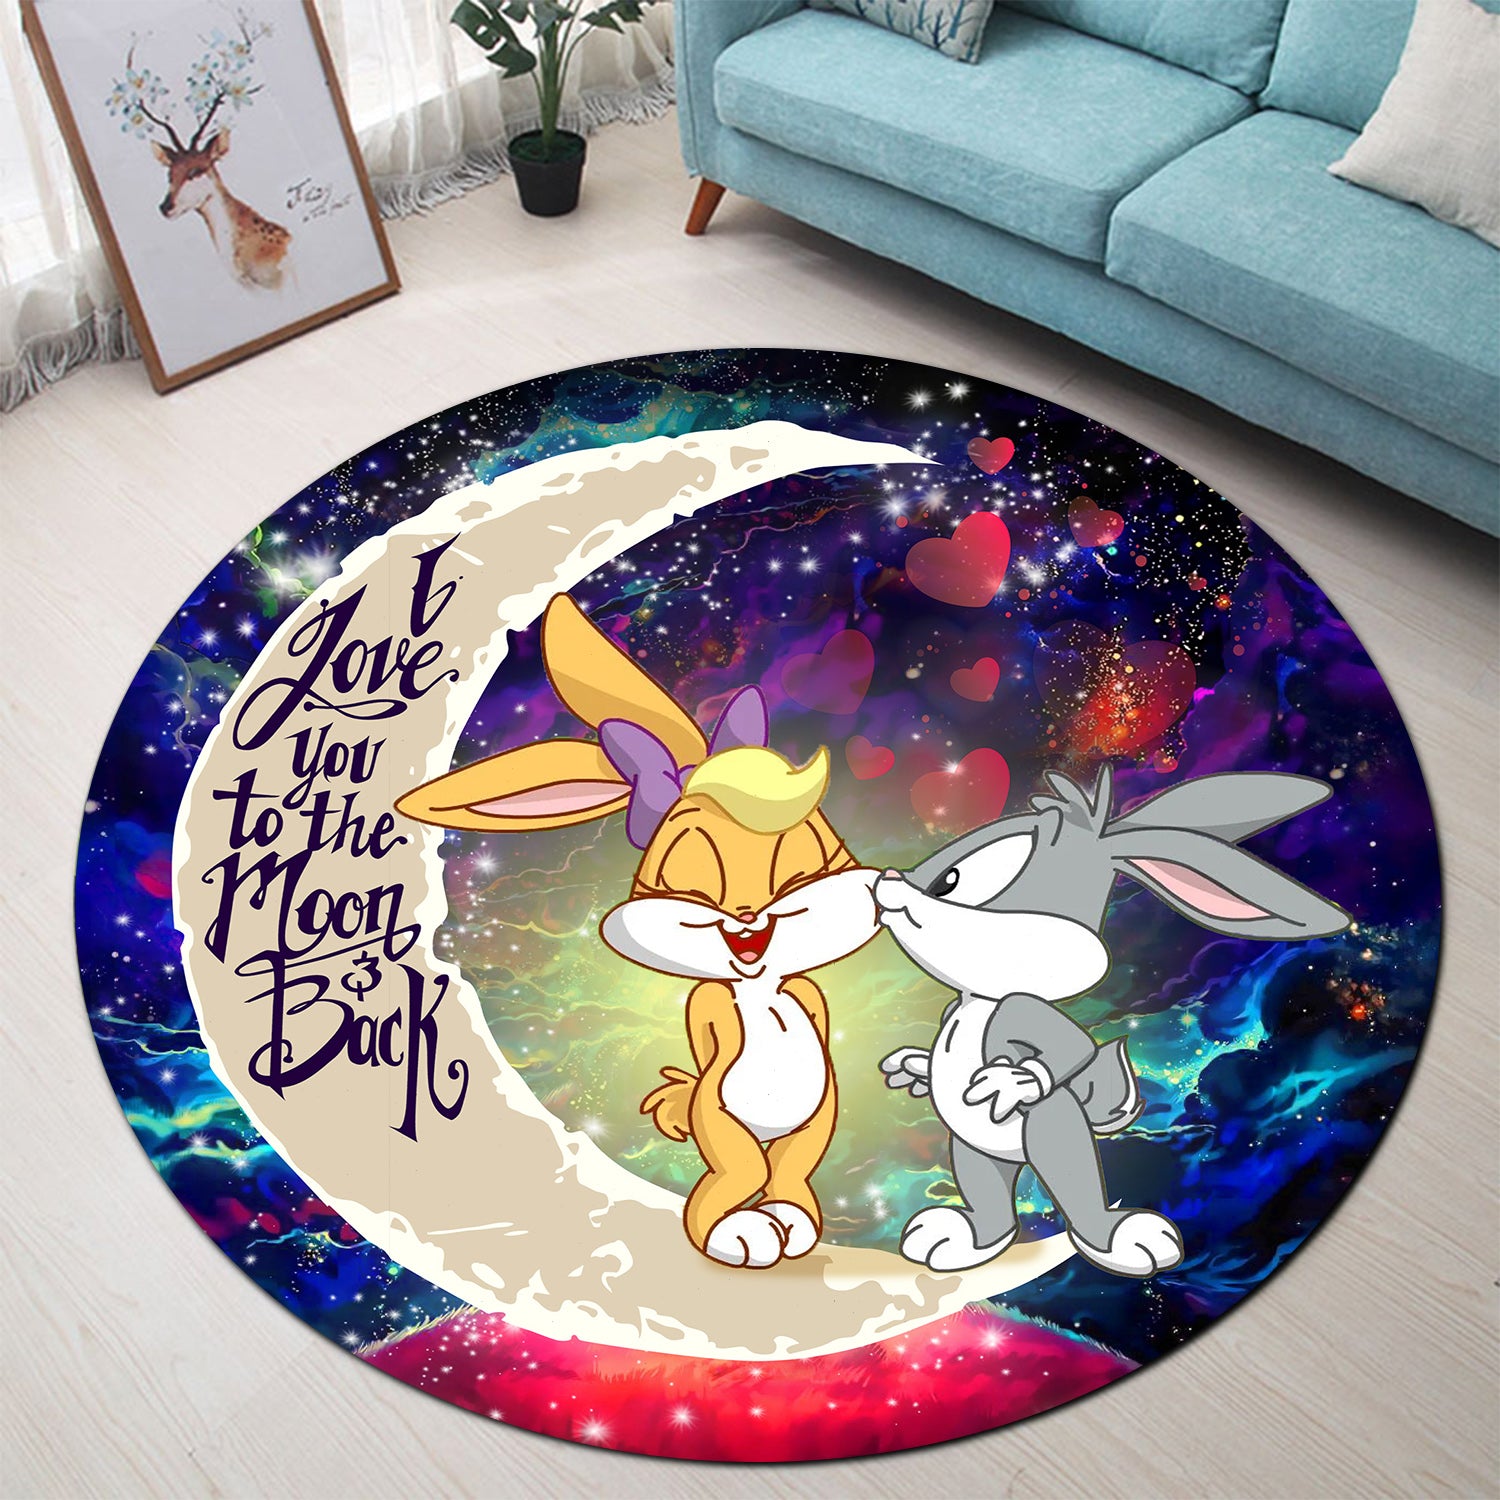 Bunny Couple Love You To The Moon Galaxy Round Carpet Rug Bedroom Livingroom Home Decor Nearkii